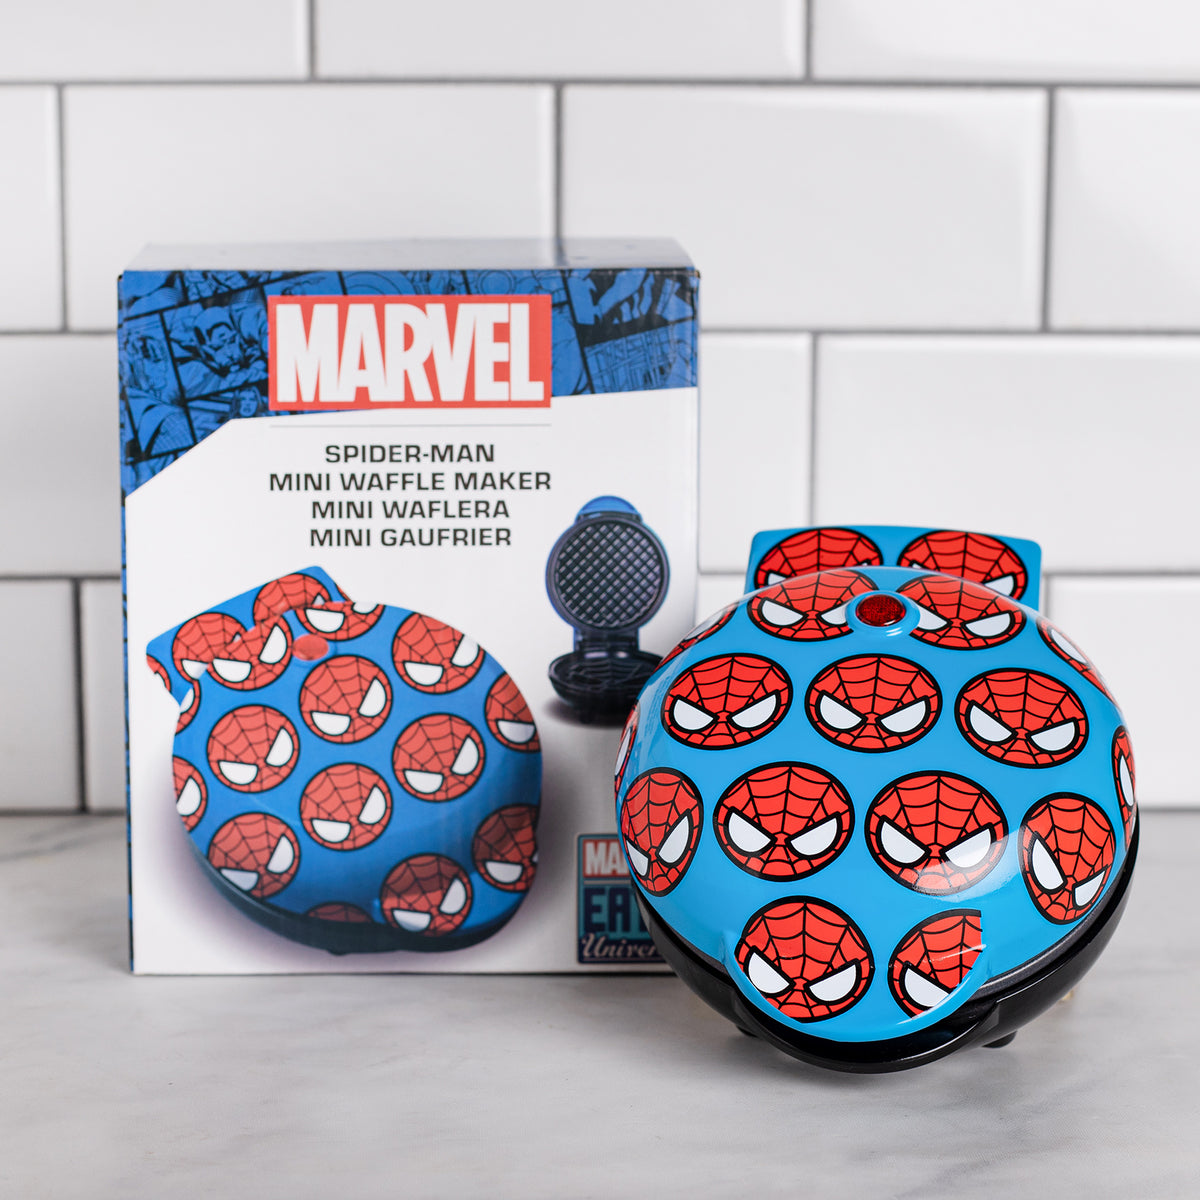 Marvel Spider-Man Mini Waffle Maker